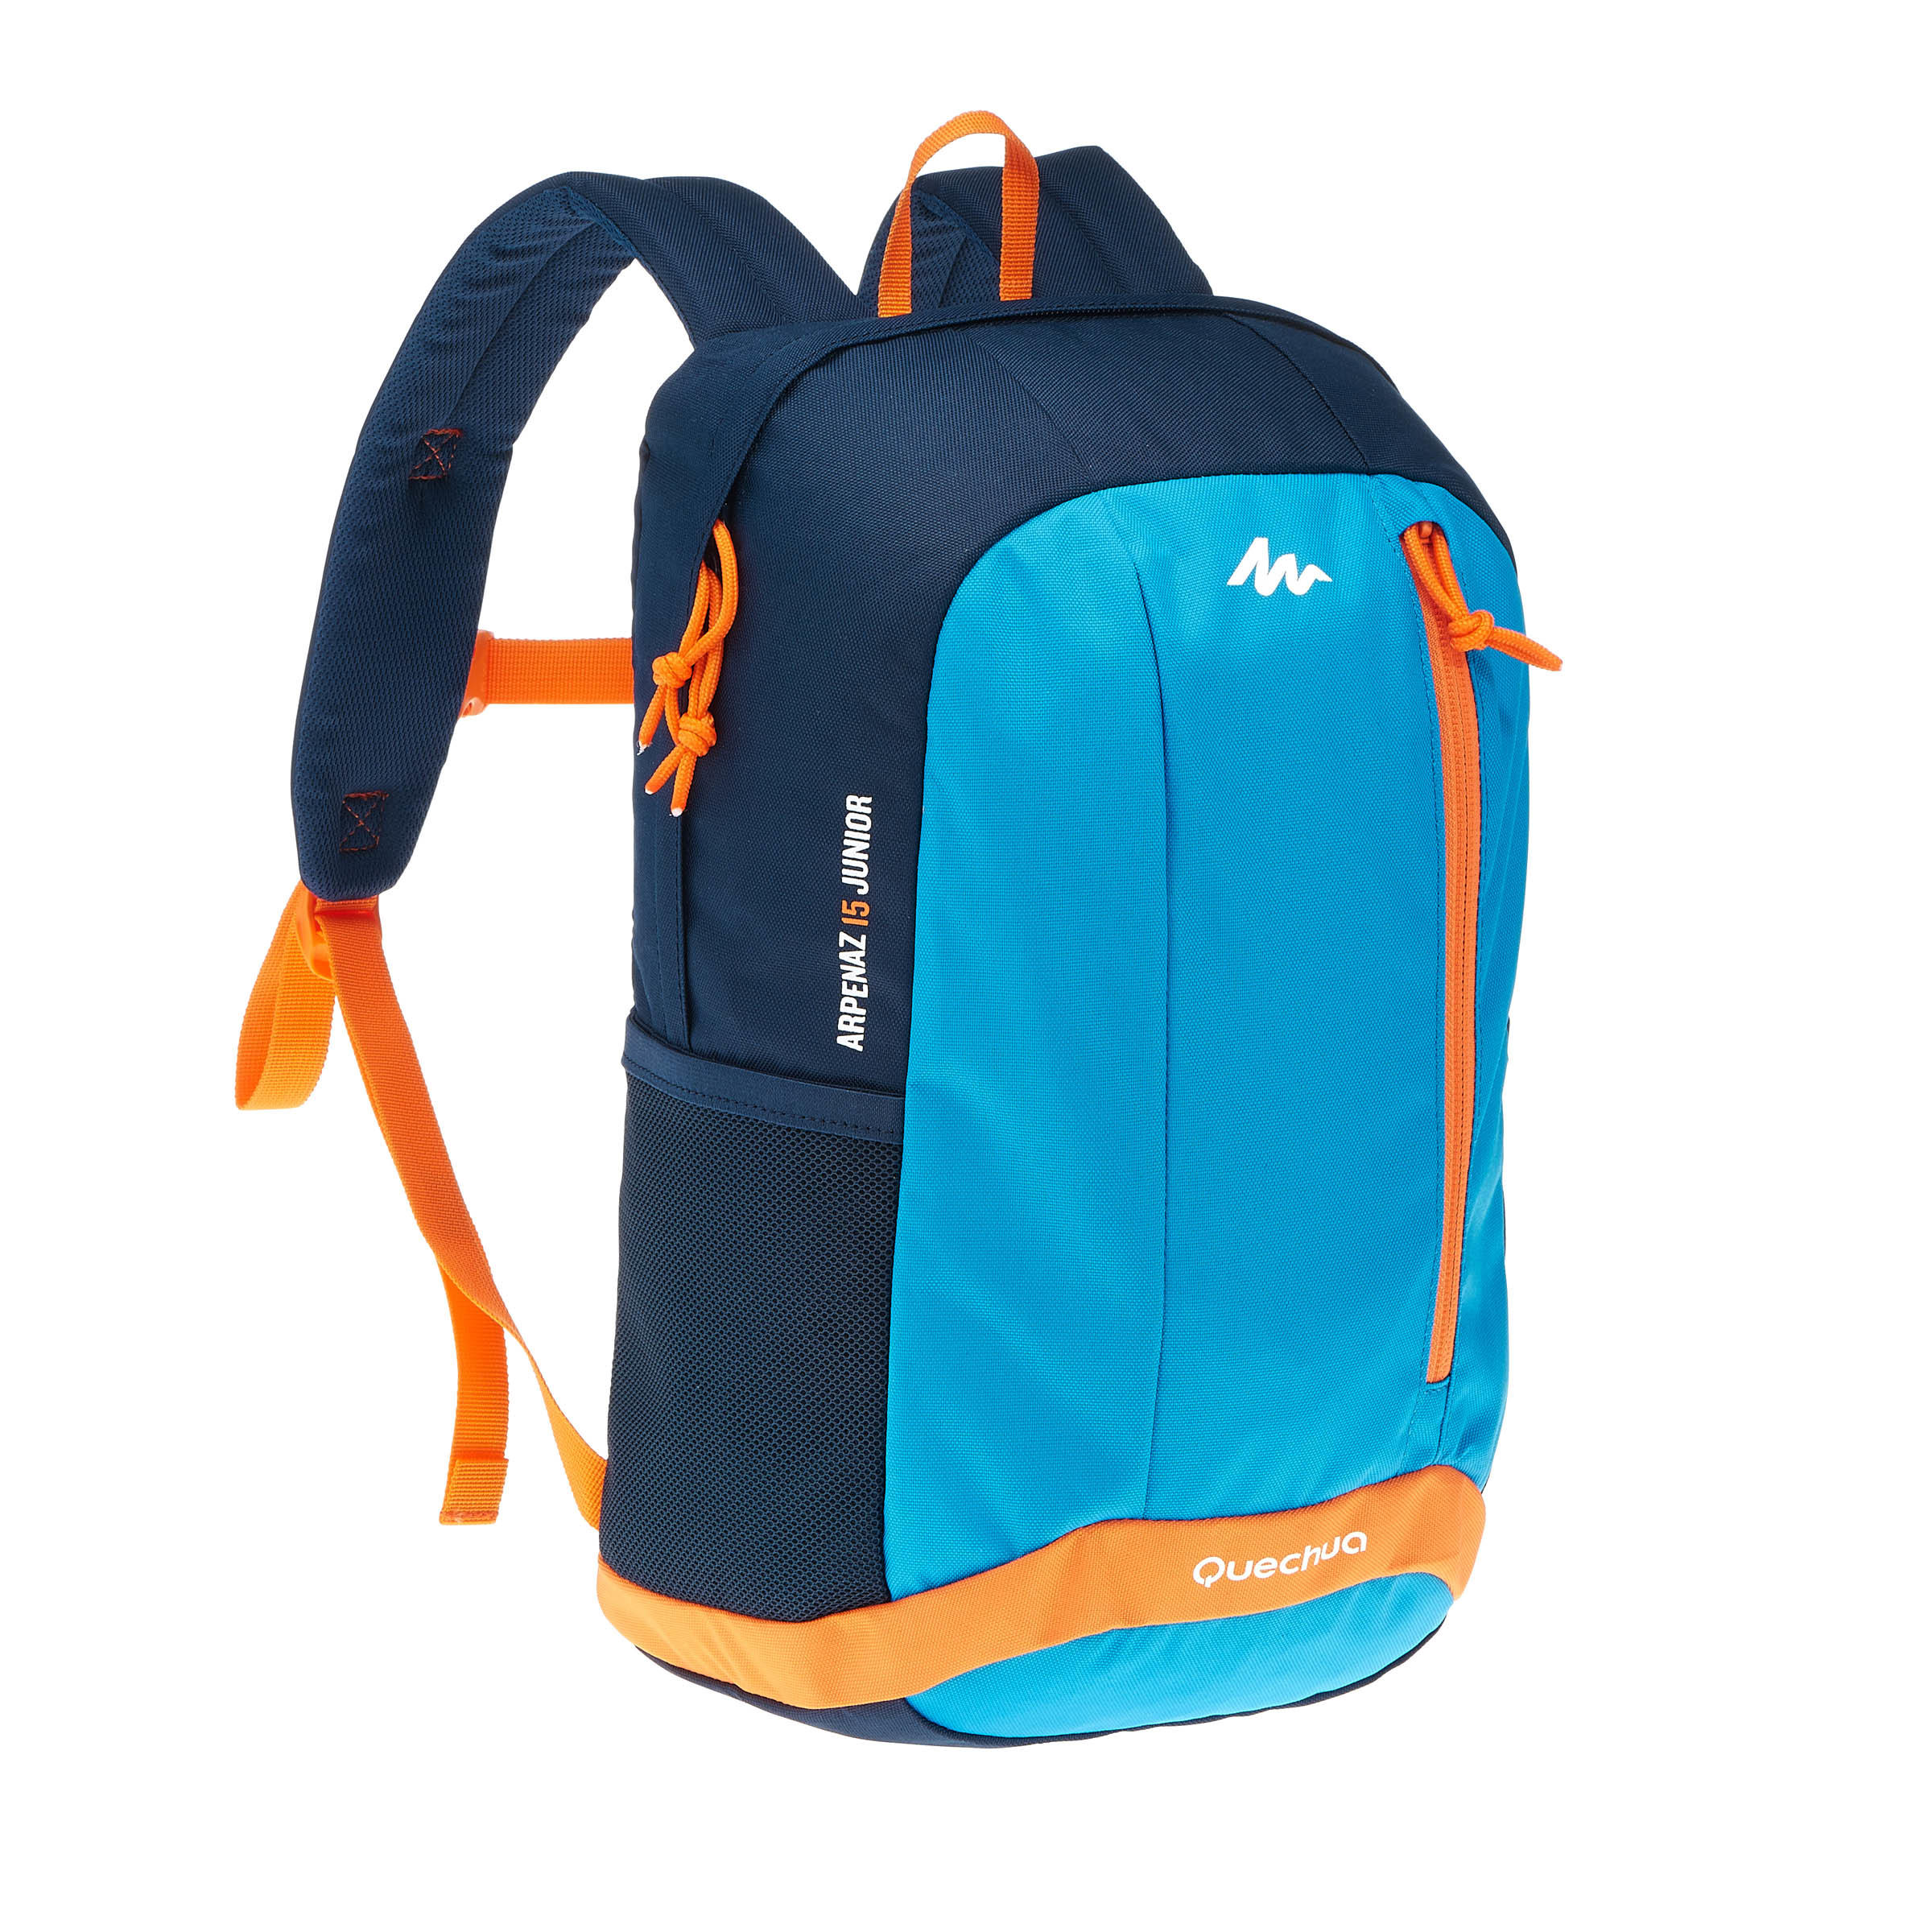 decathlon backpacks india